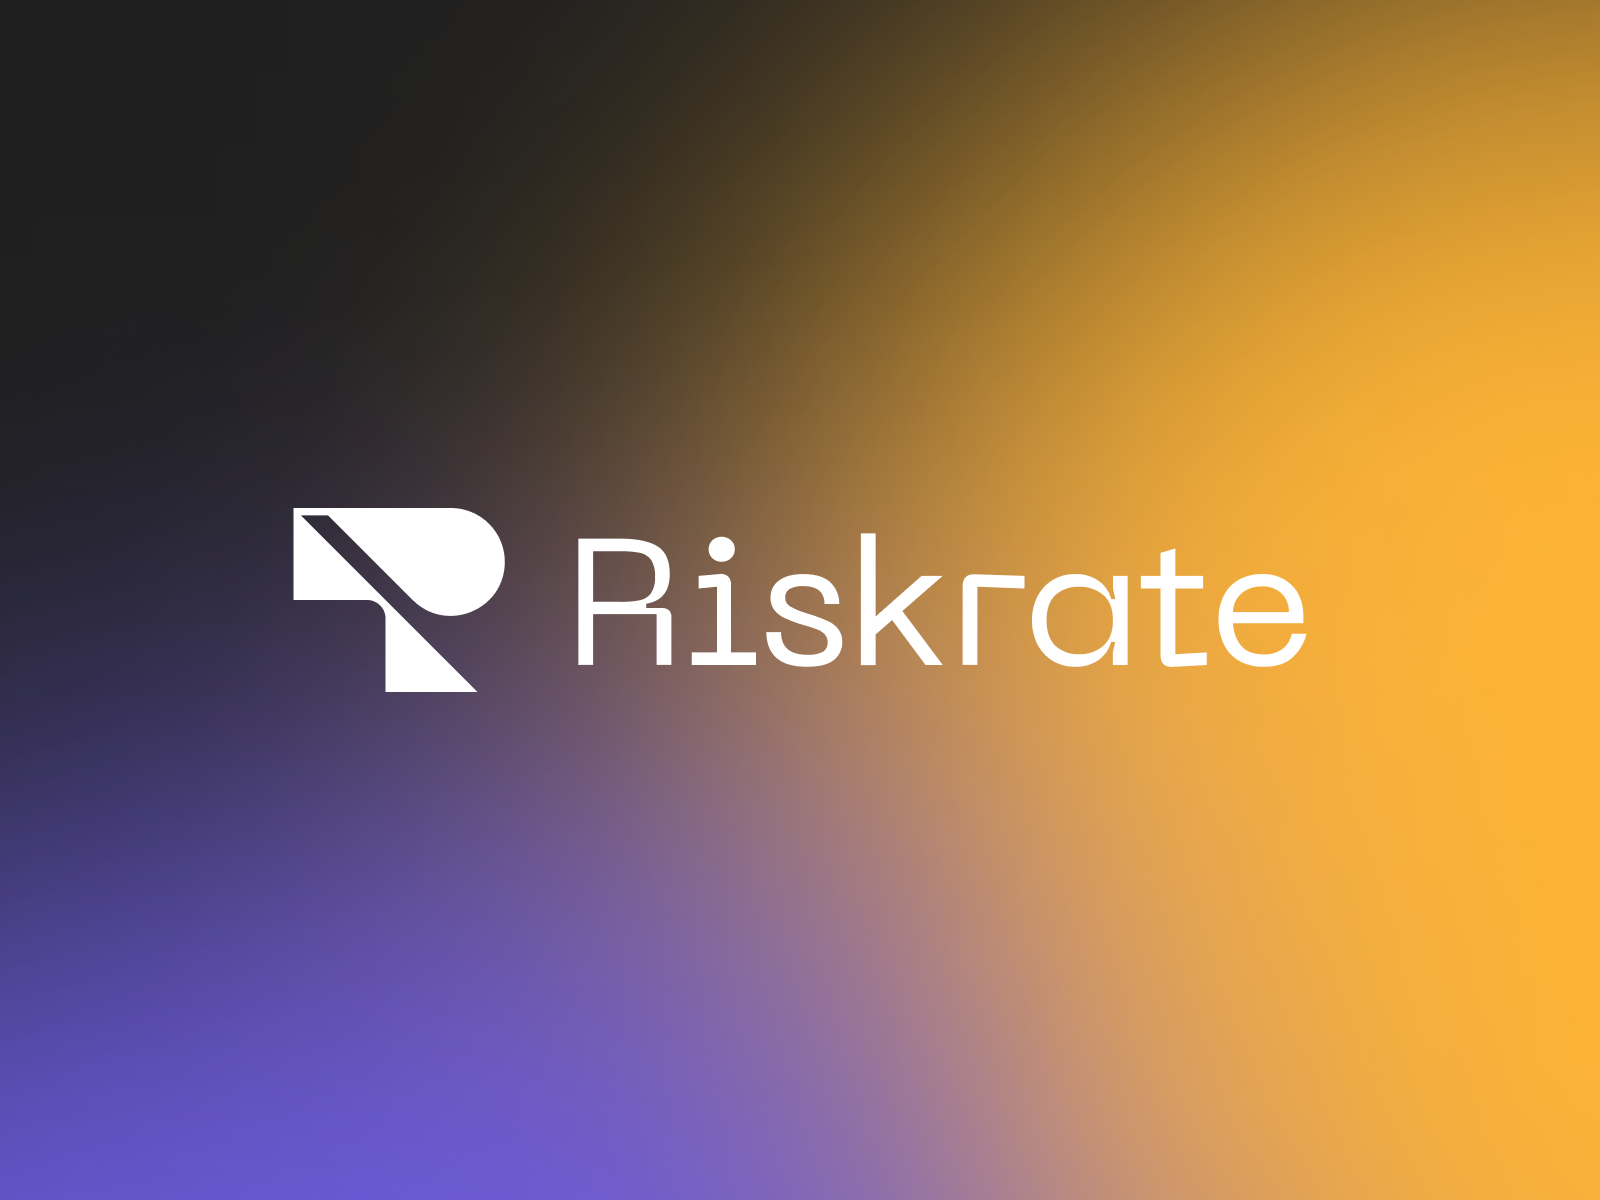 Riskrate Logo & Brand Identity Design